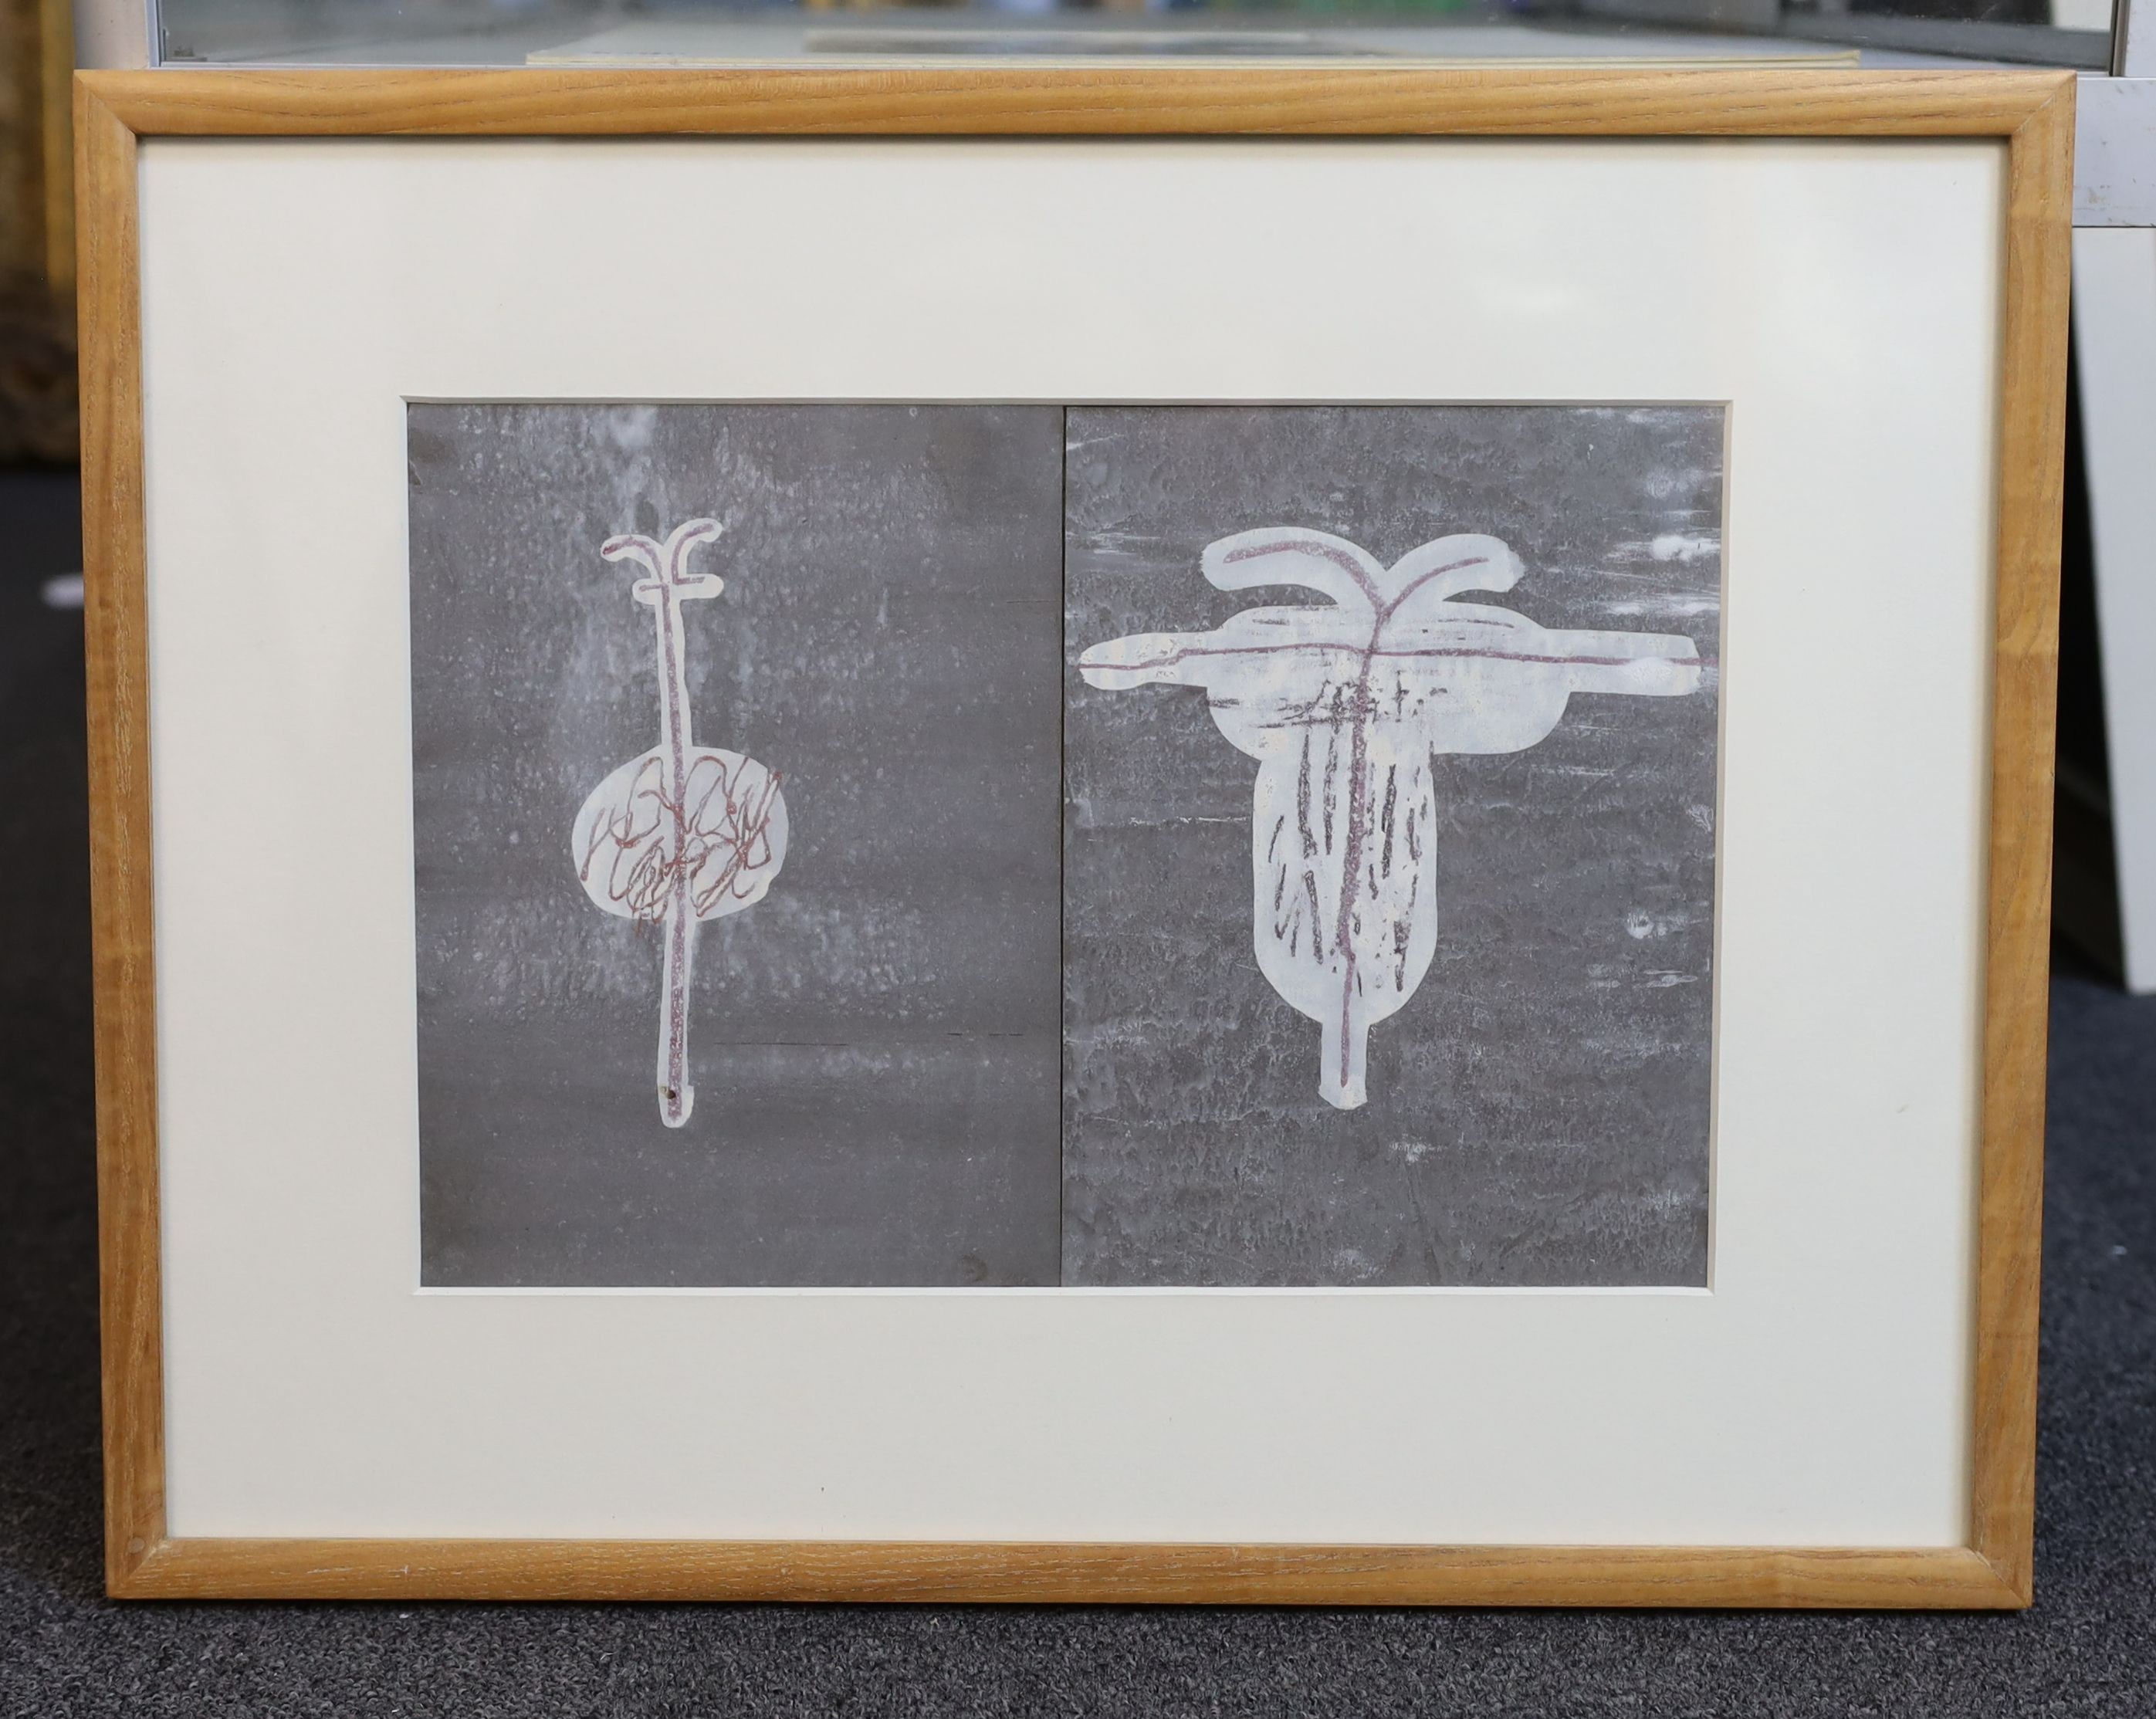 Prunella Clough (1919-1999), 'Simple Organisms' (c.1990's), pastel and gouache on card, 24.5 x 35.5cm